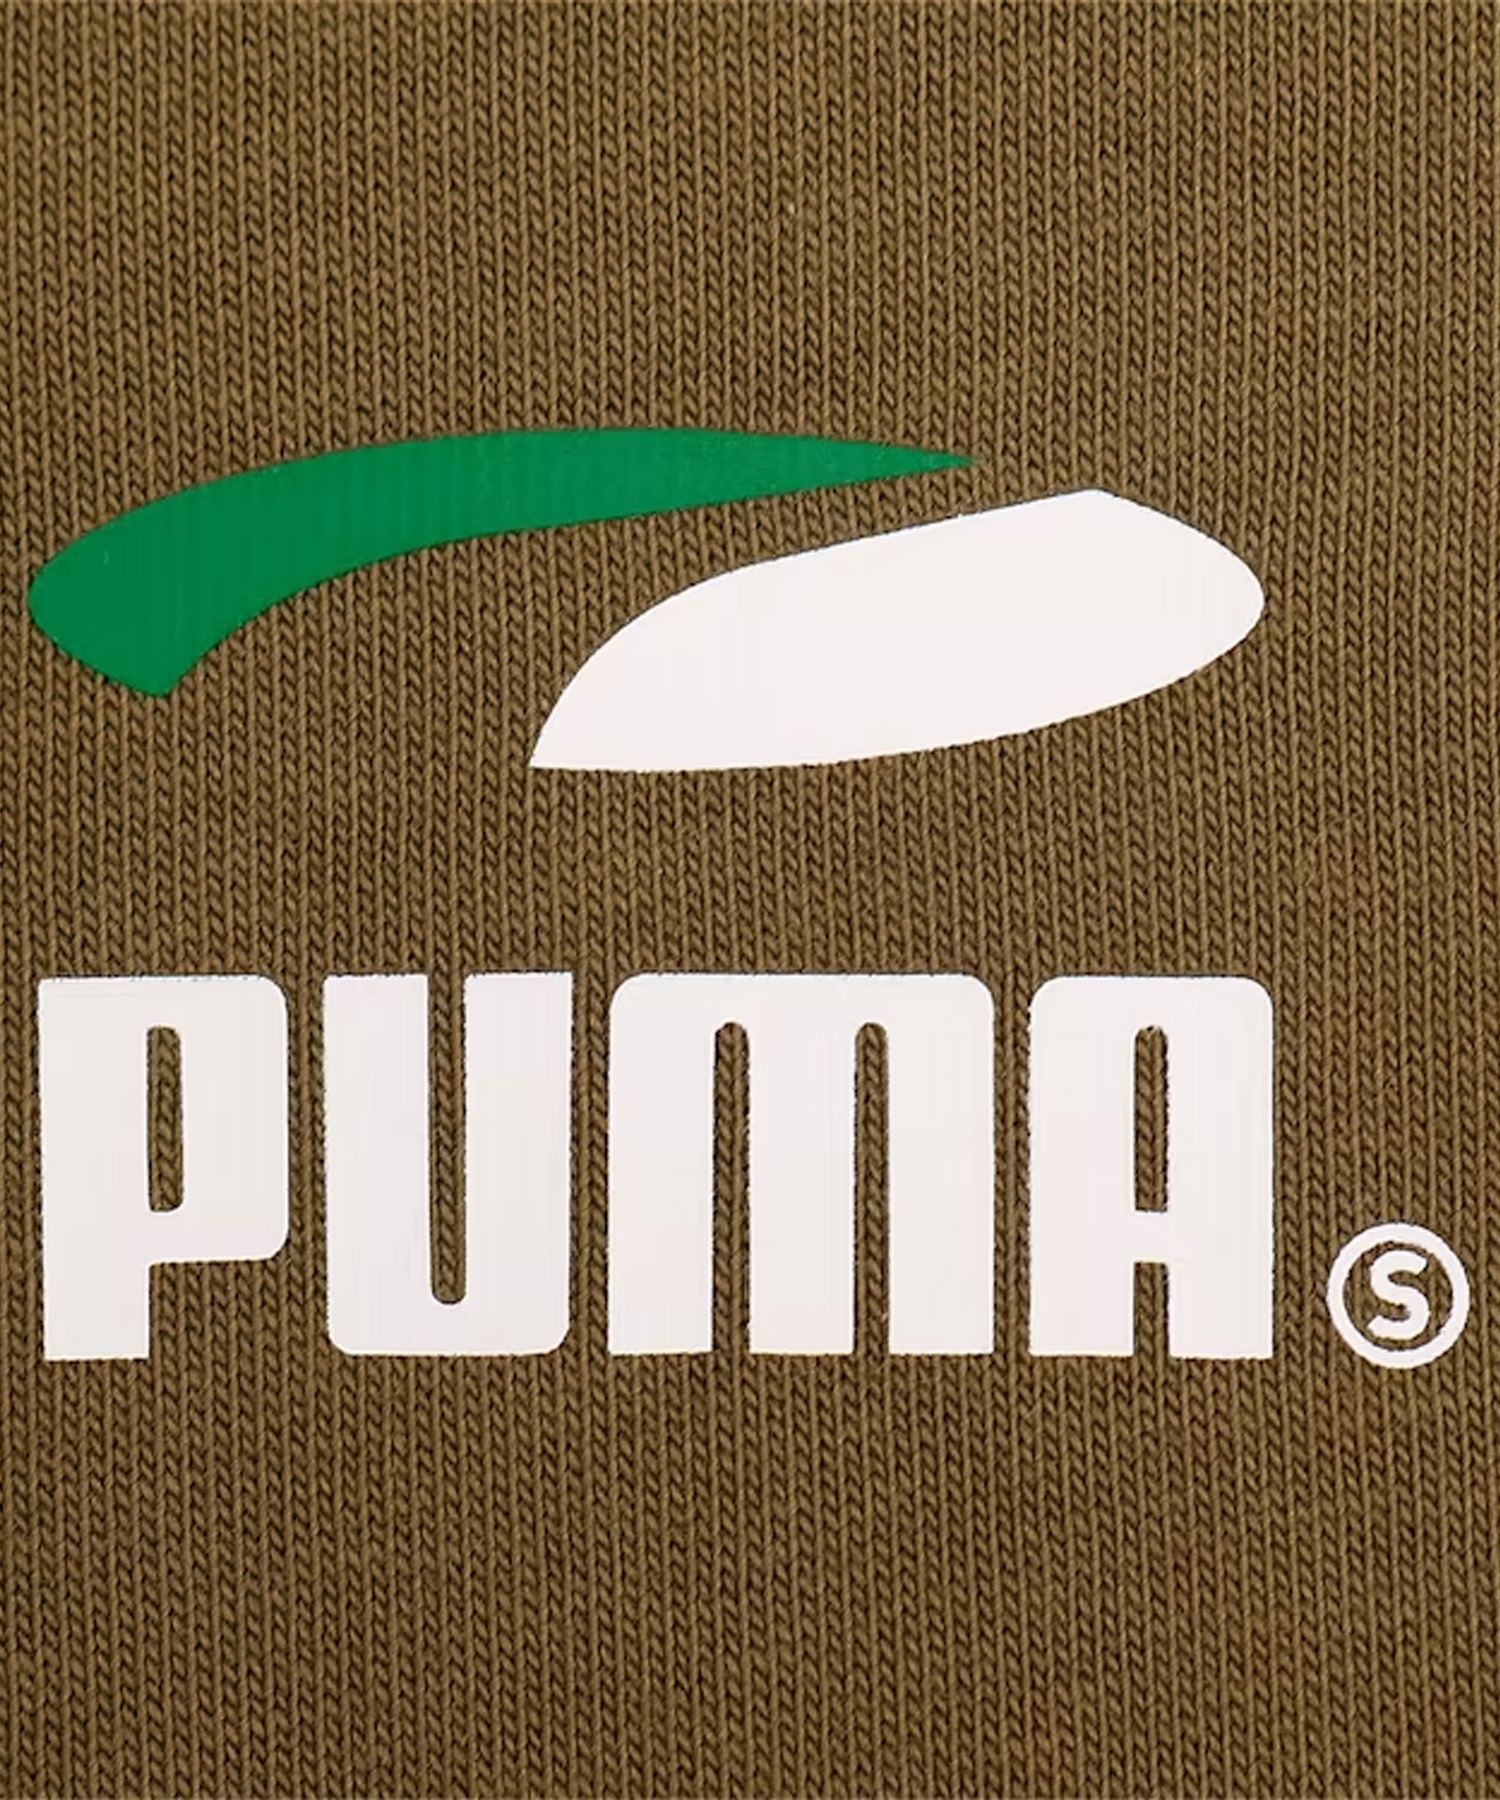 PUMA SKATEBOARDING/プーマスケートボーディング メンズ スケートボード Tシャツ CO 長袖 ロンT 623032(01-M)